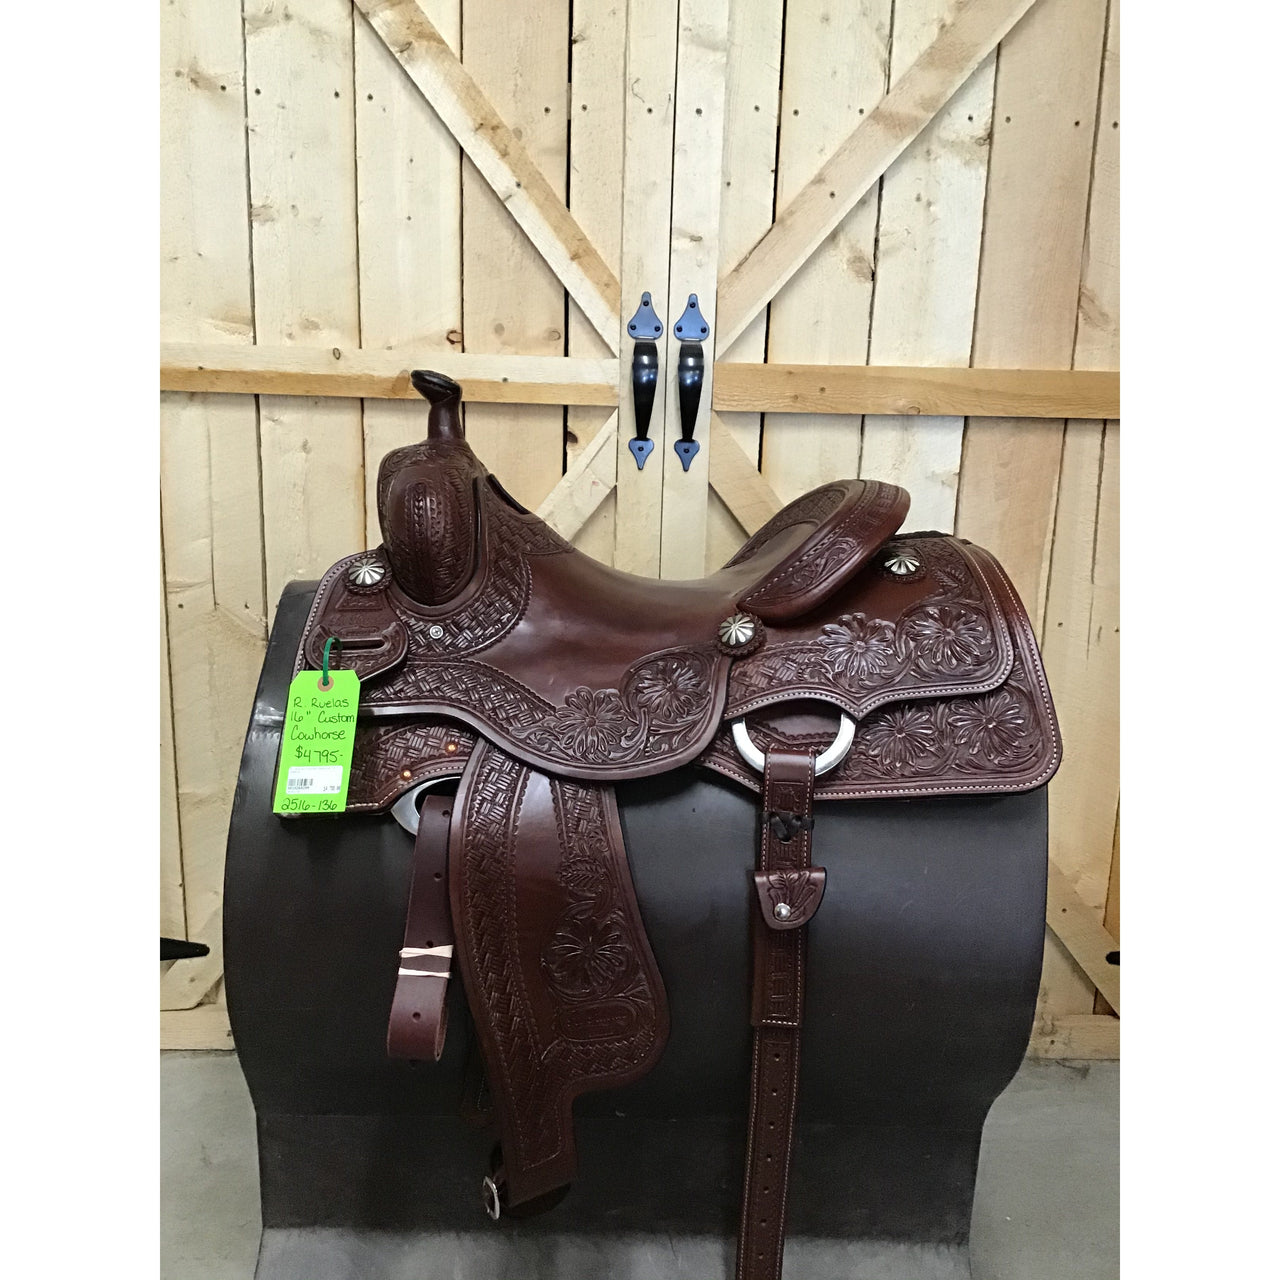 R. Ruelas 16" Custom Cowhorse Saddle